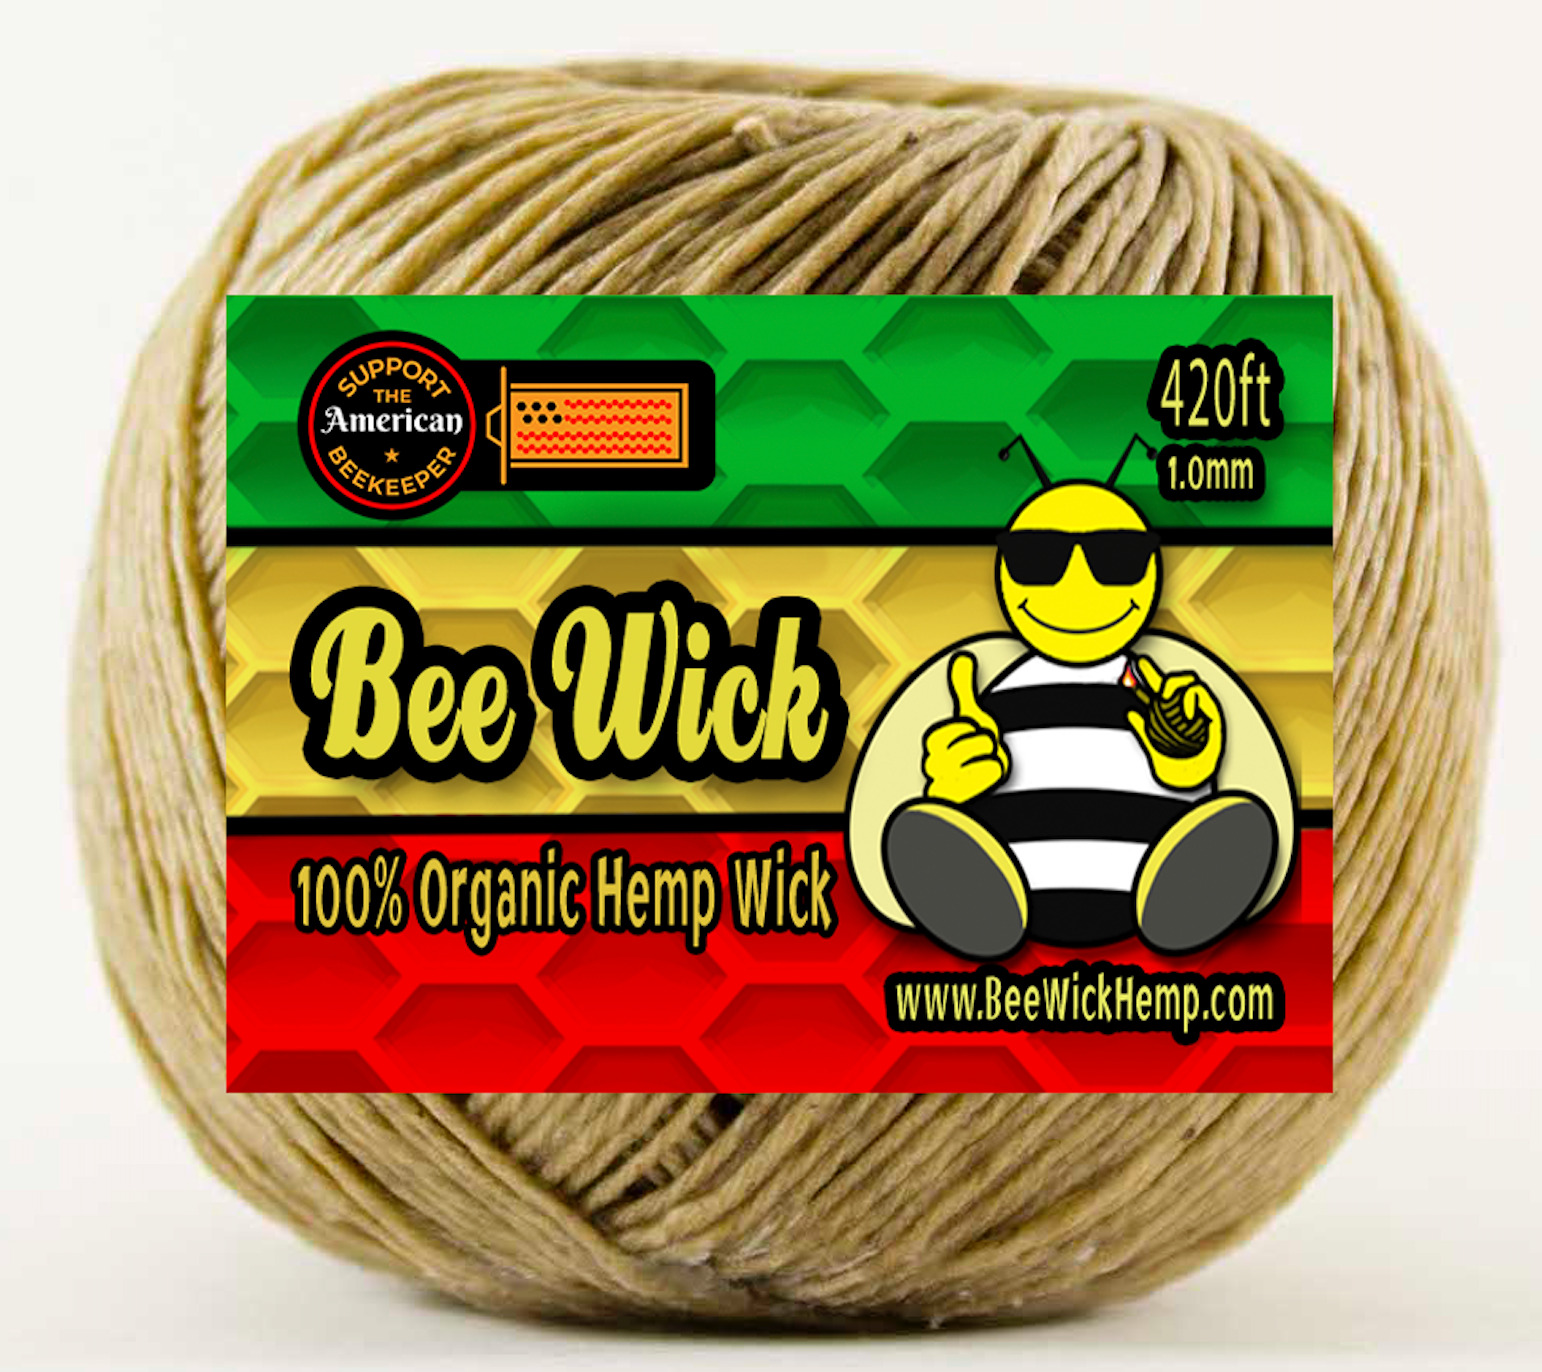 100% Organic Hemp Wick by Bee Wick Hemp- 420 FT Spool (1.0mm) 